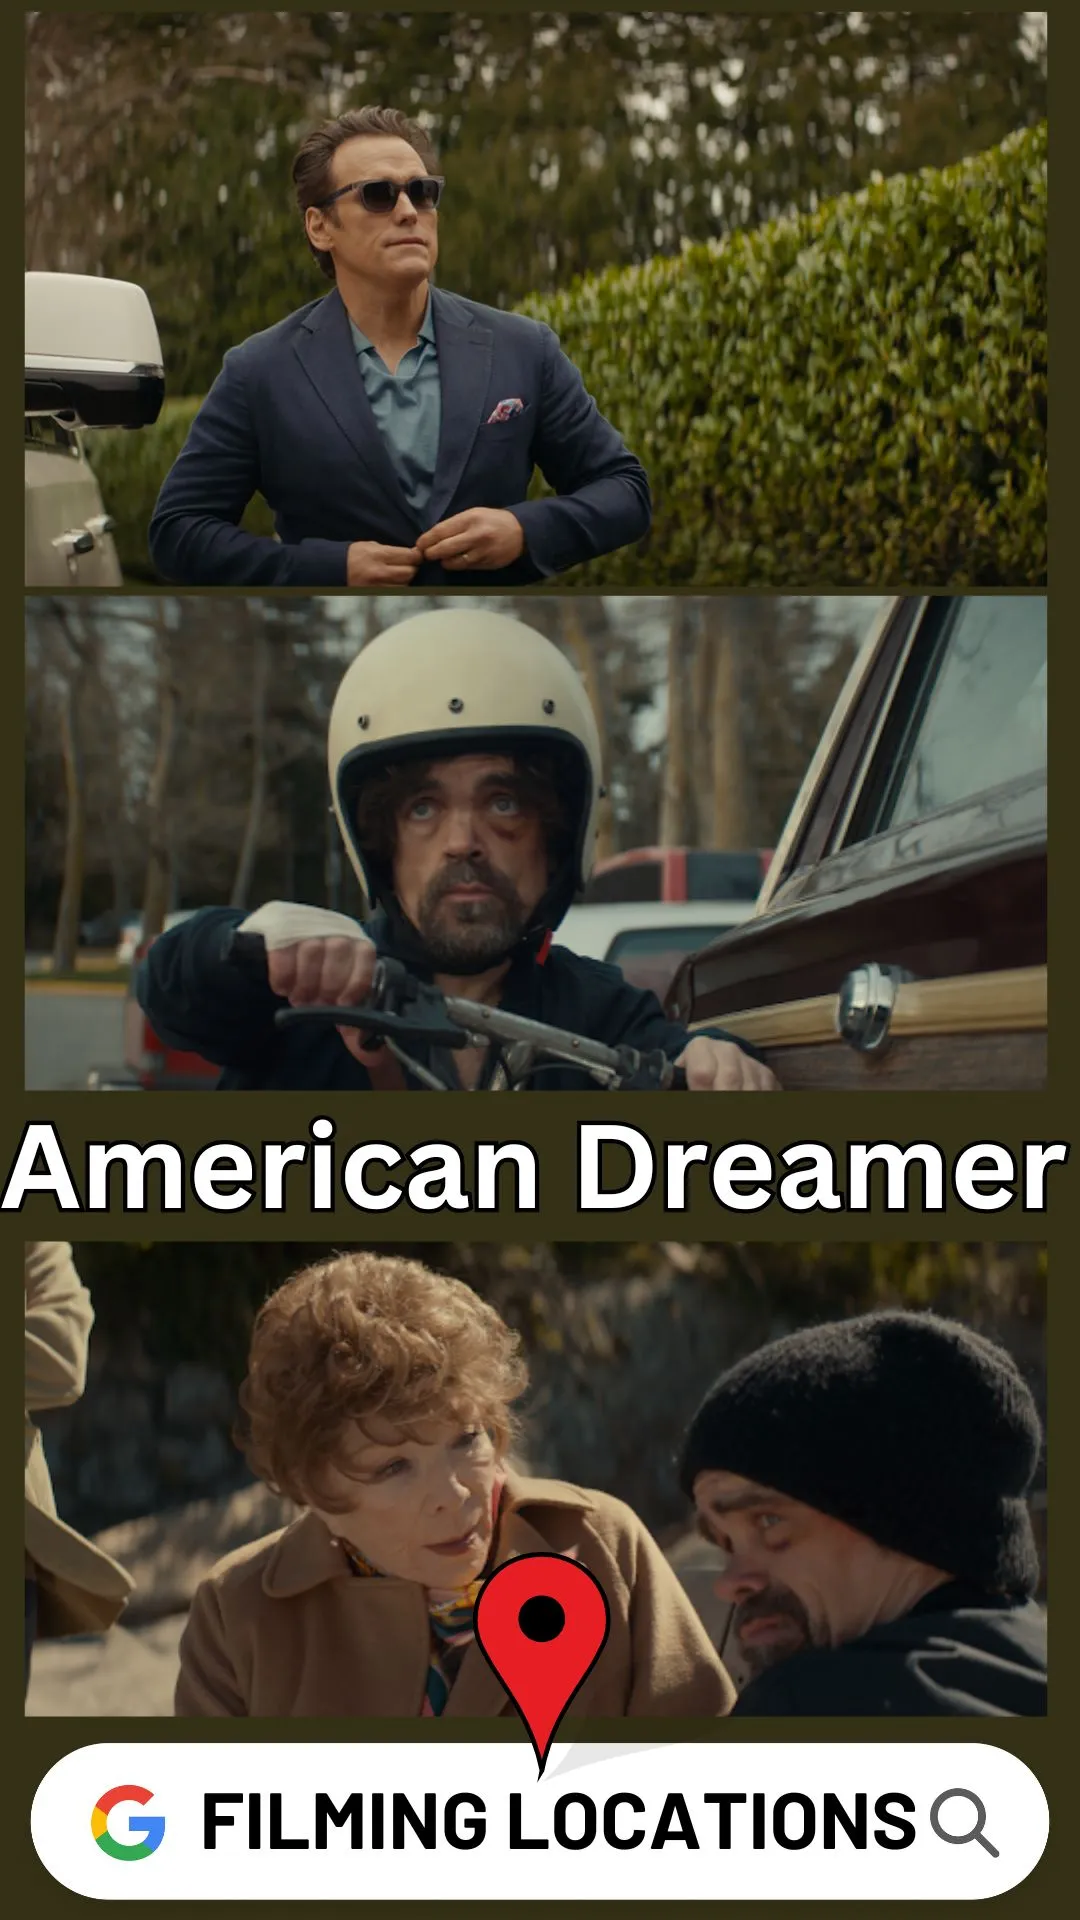 American Dreamer Filming Locations